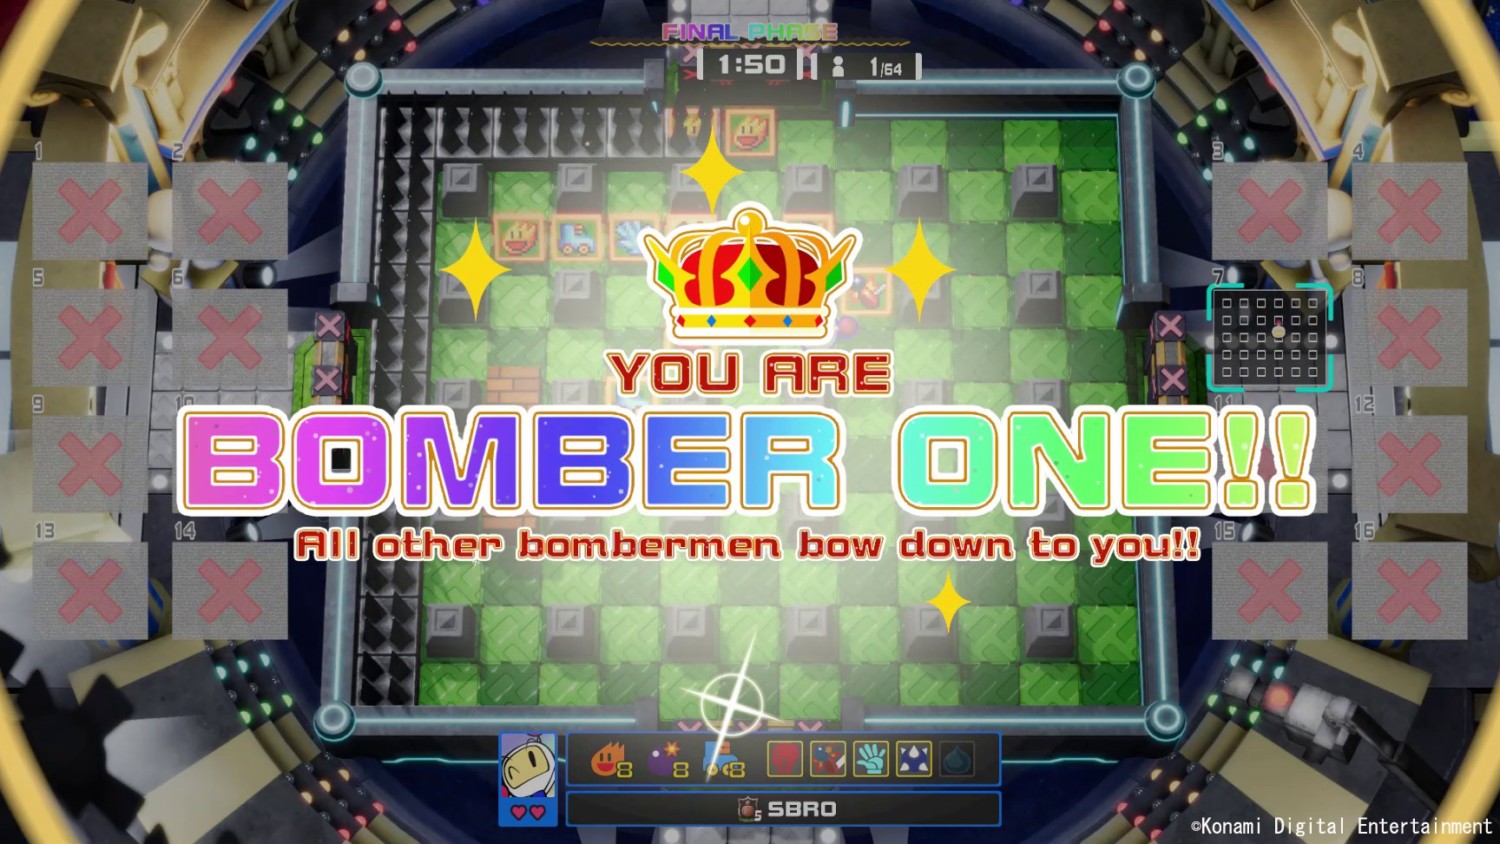 Super Bomberman R Online - Manual Online